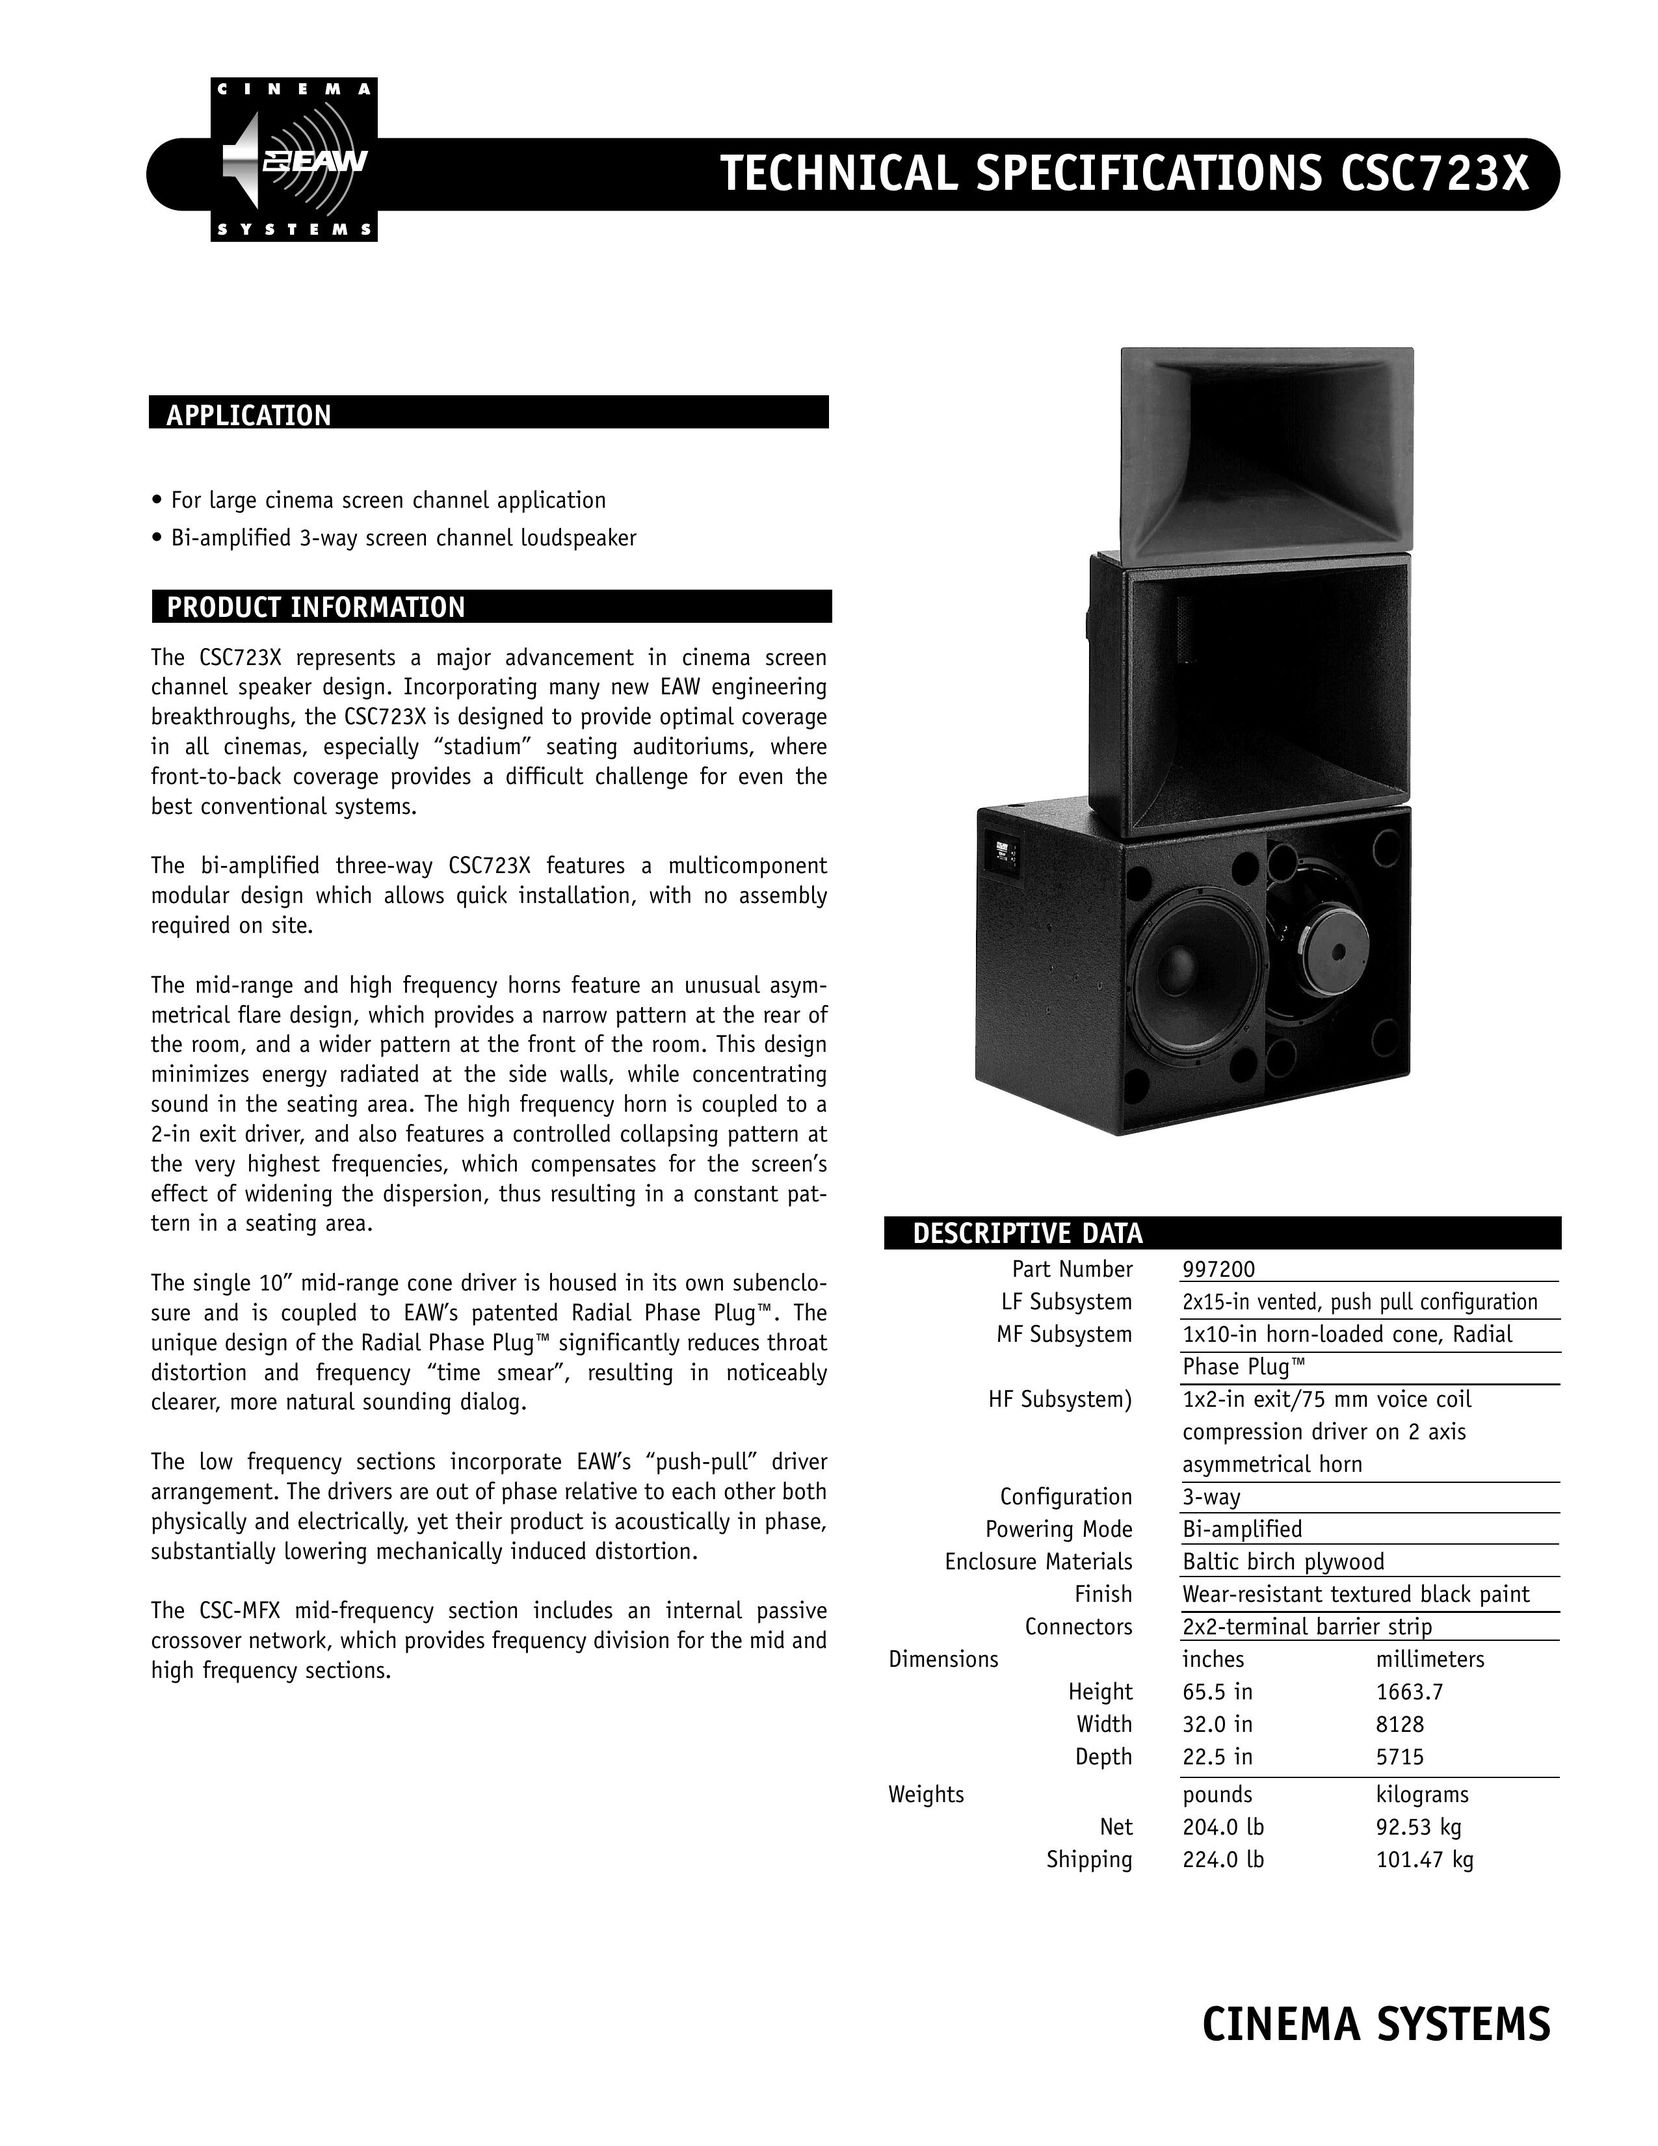 EAW CSC723X Speaker System User Manual